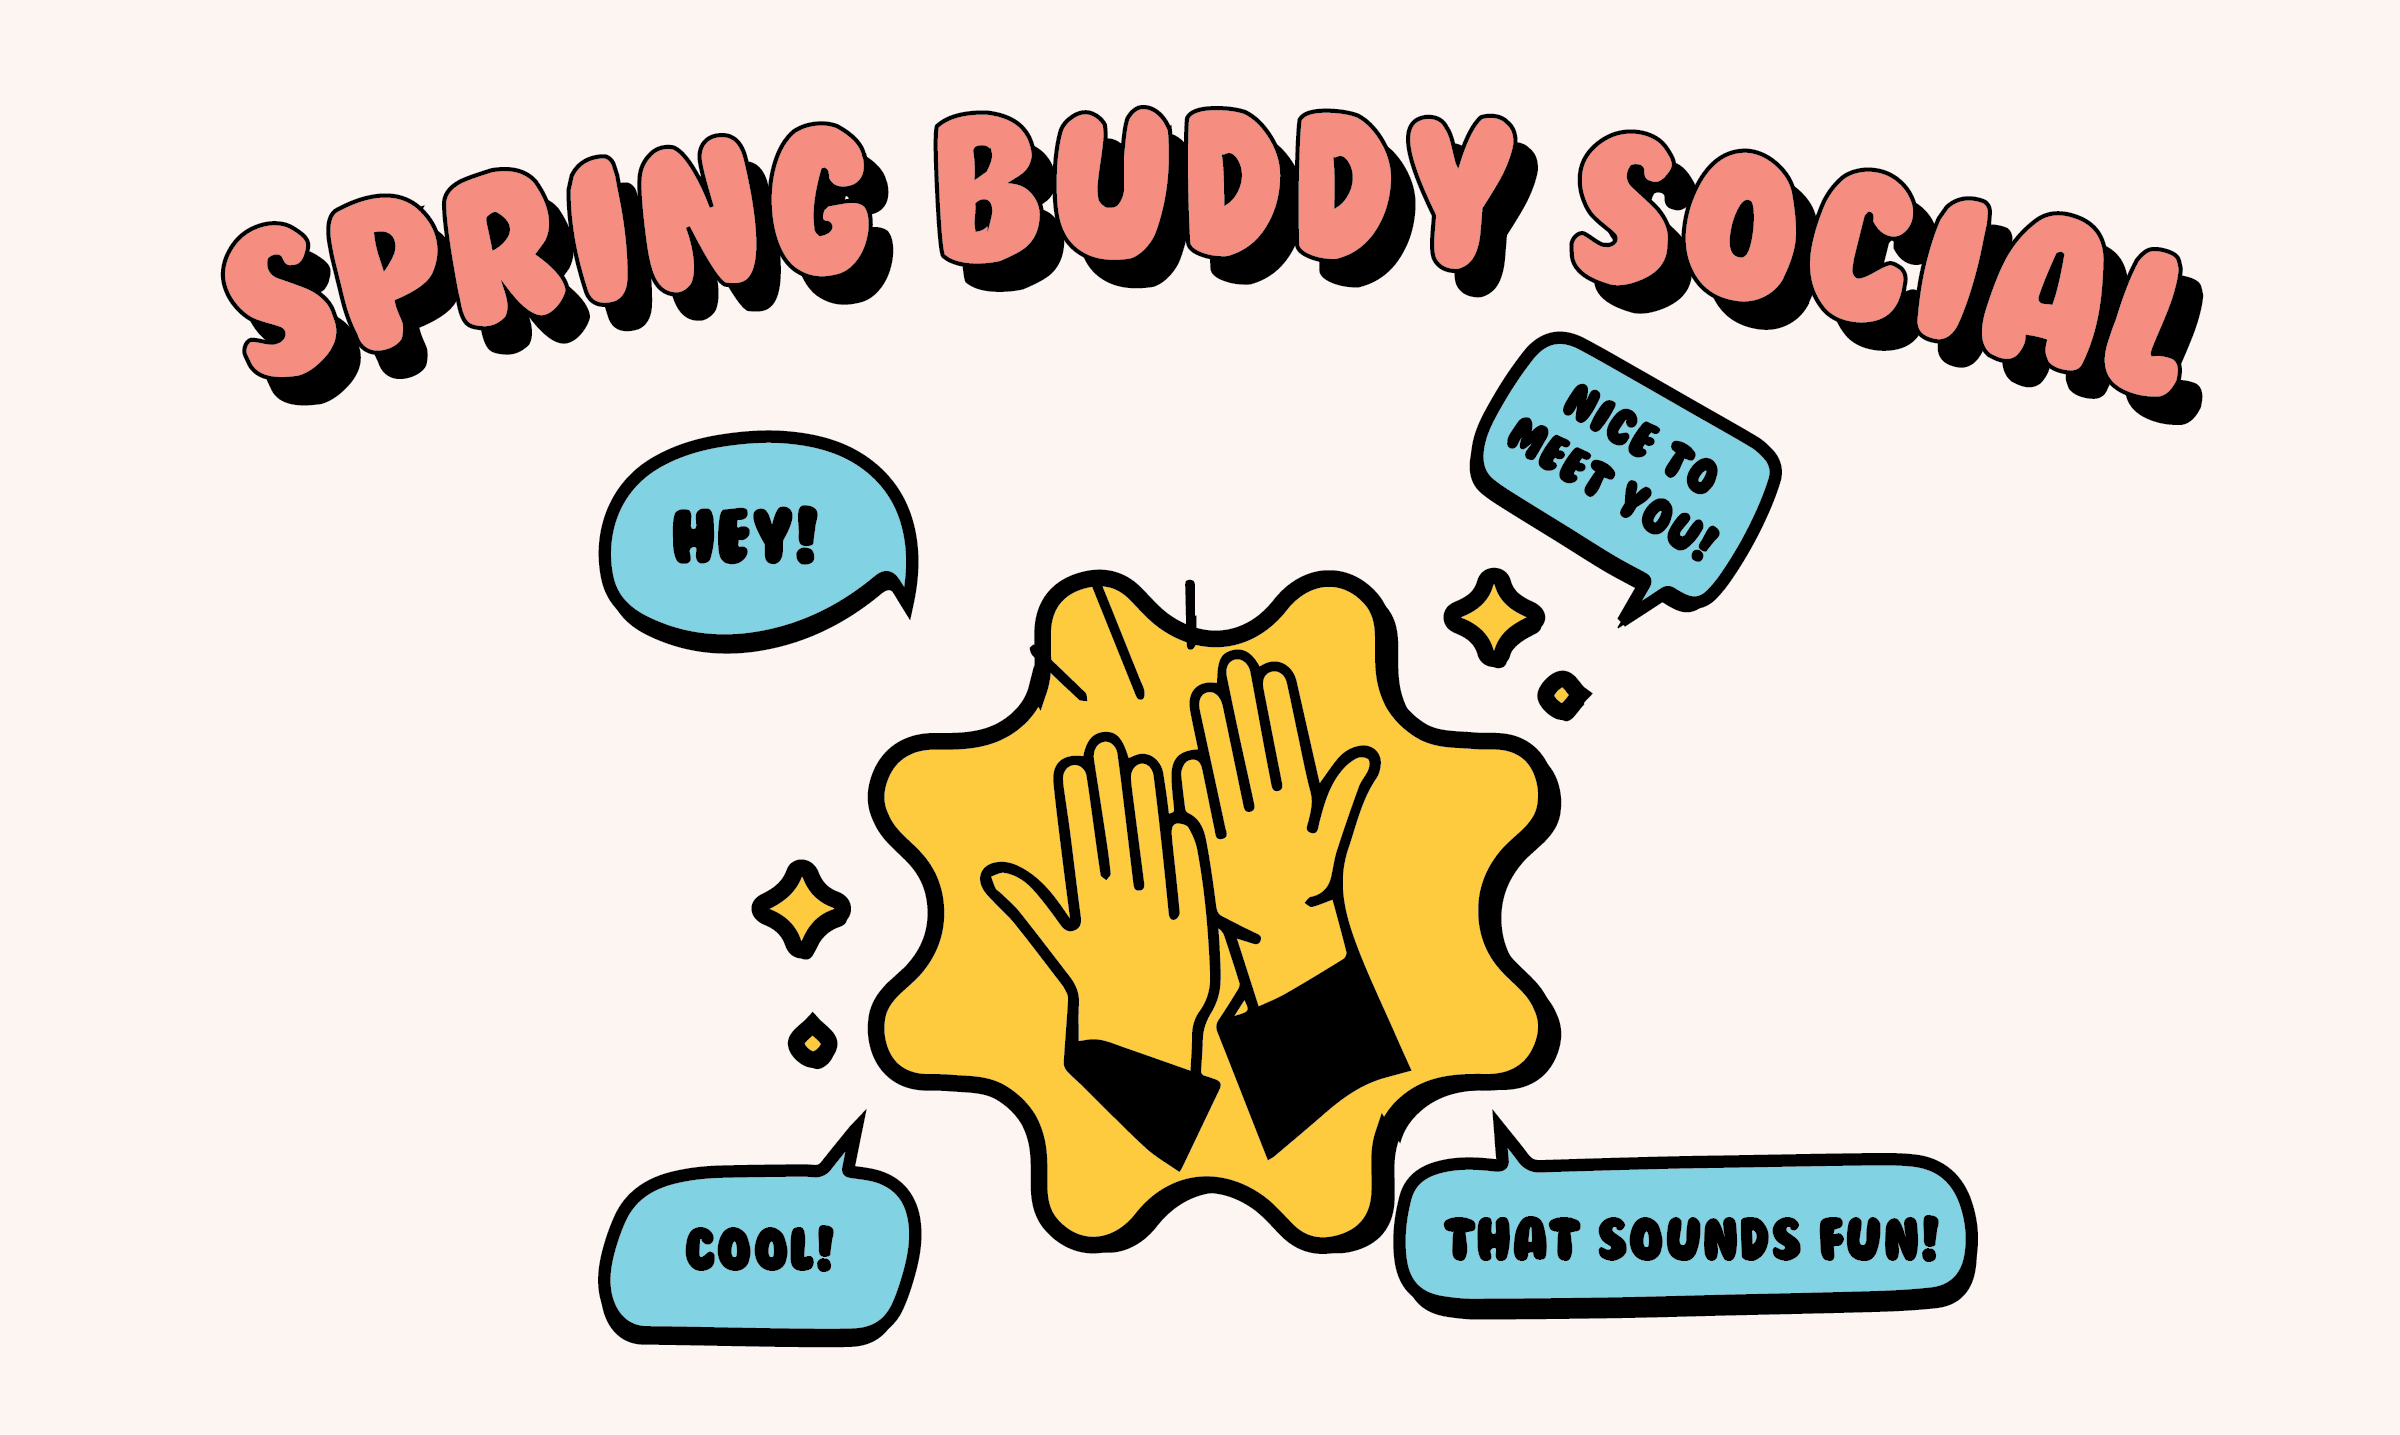 Buddy Matching Social Event